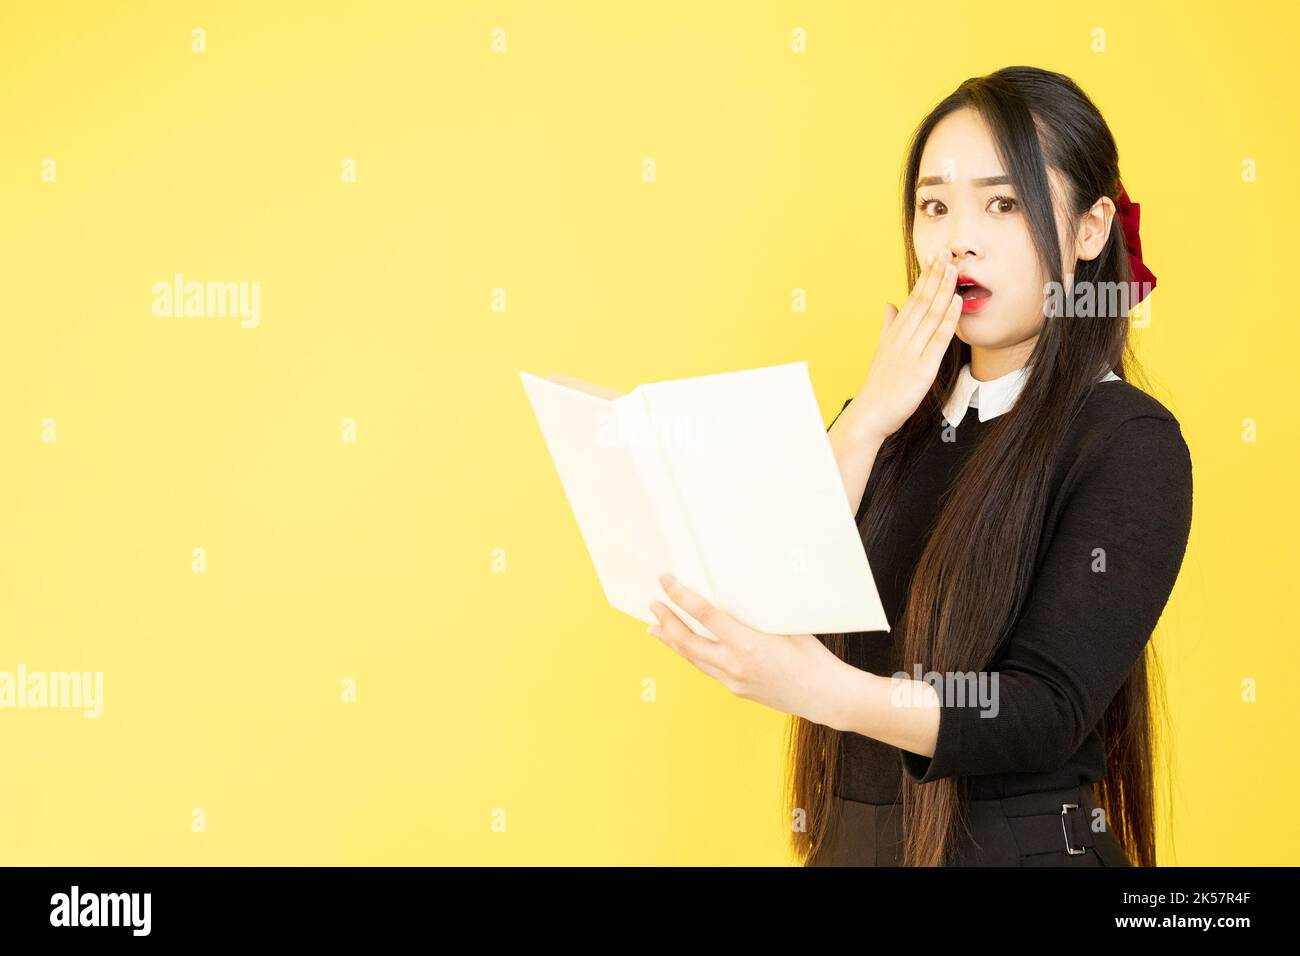 shocked student exam deadline worried girl book Stock Photo